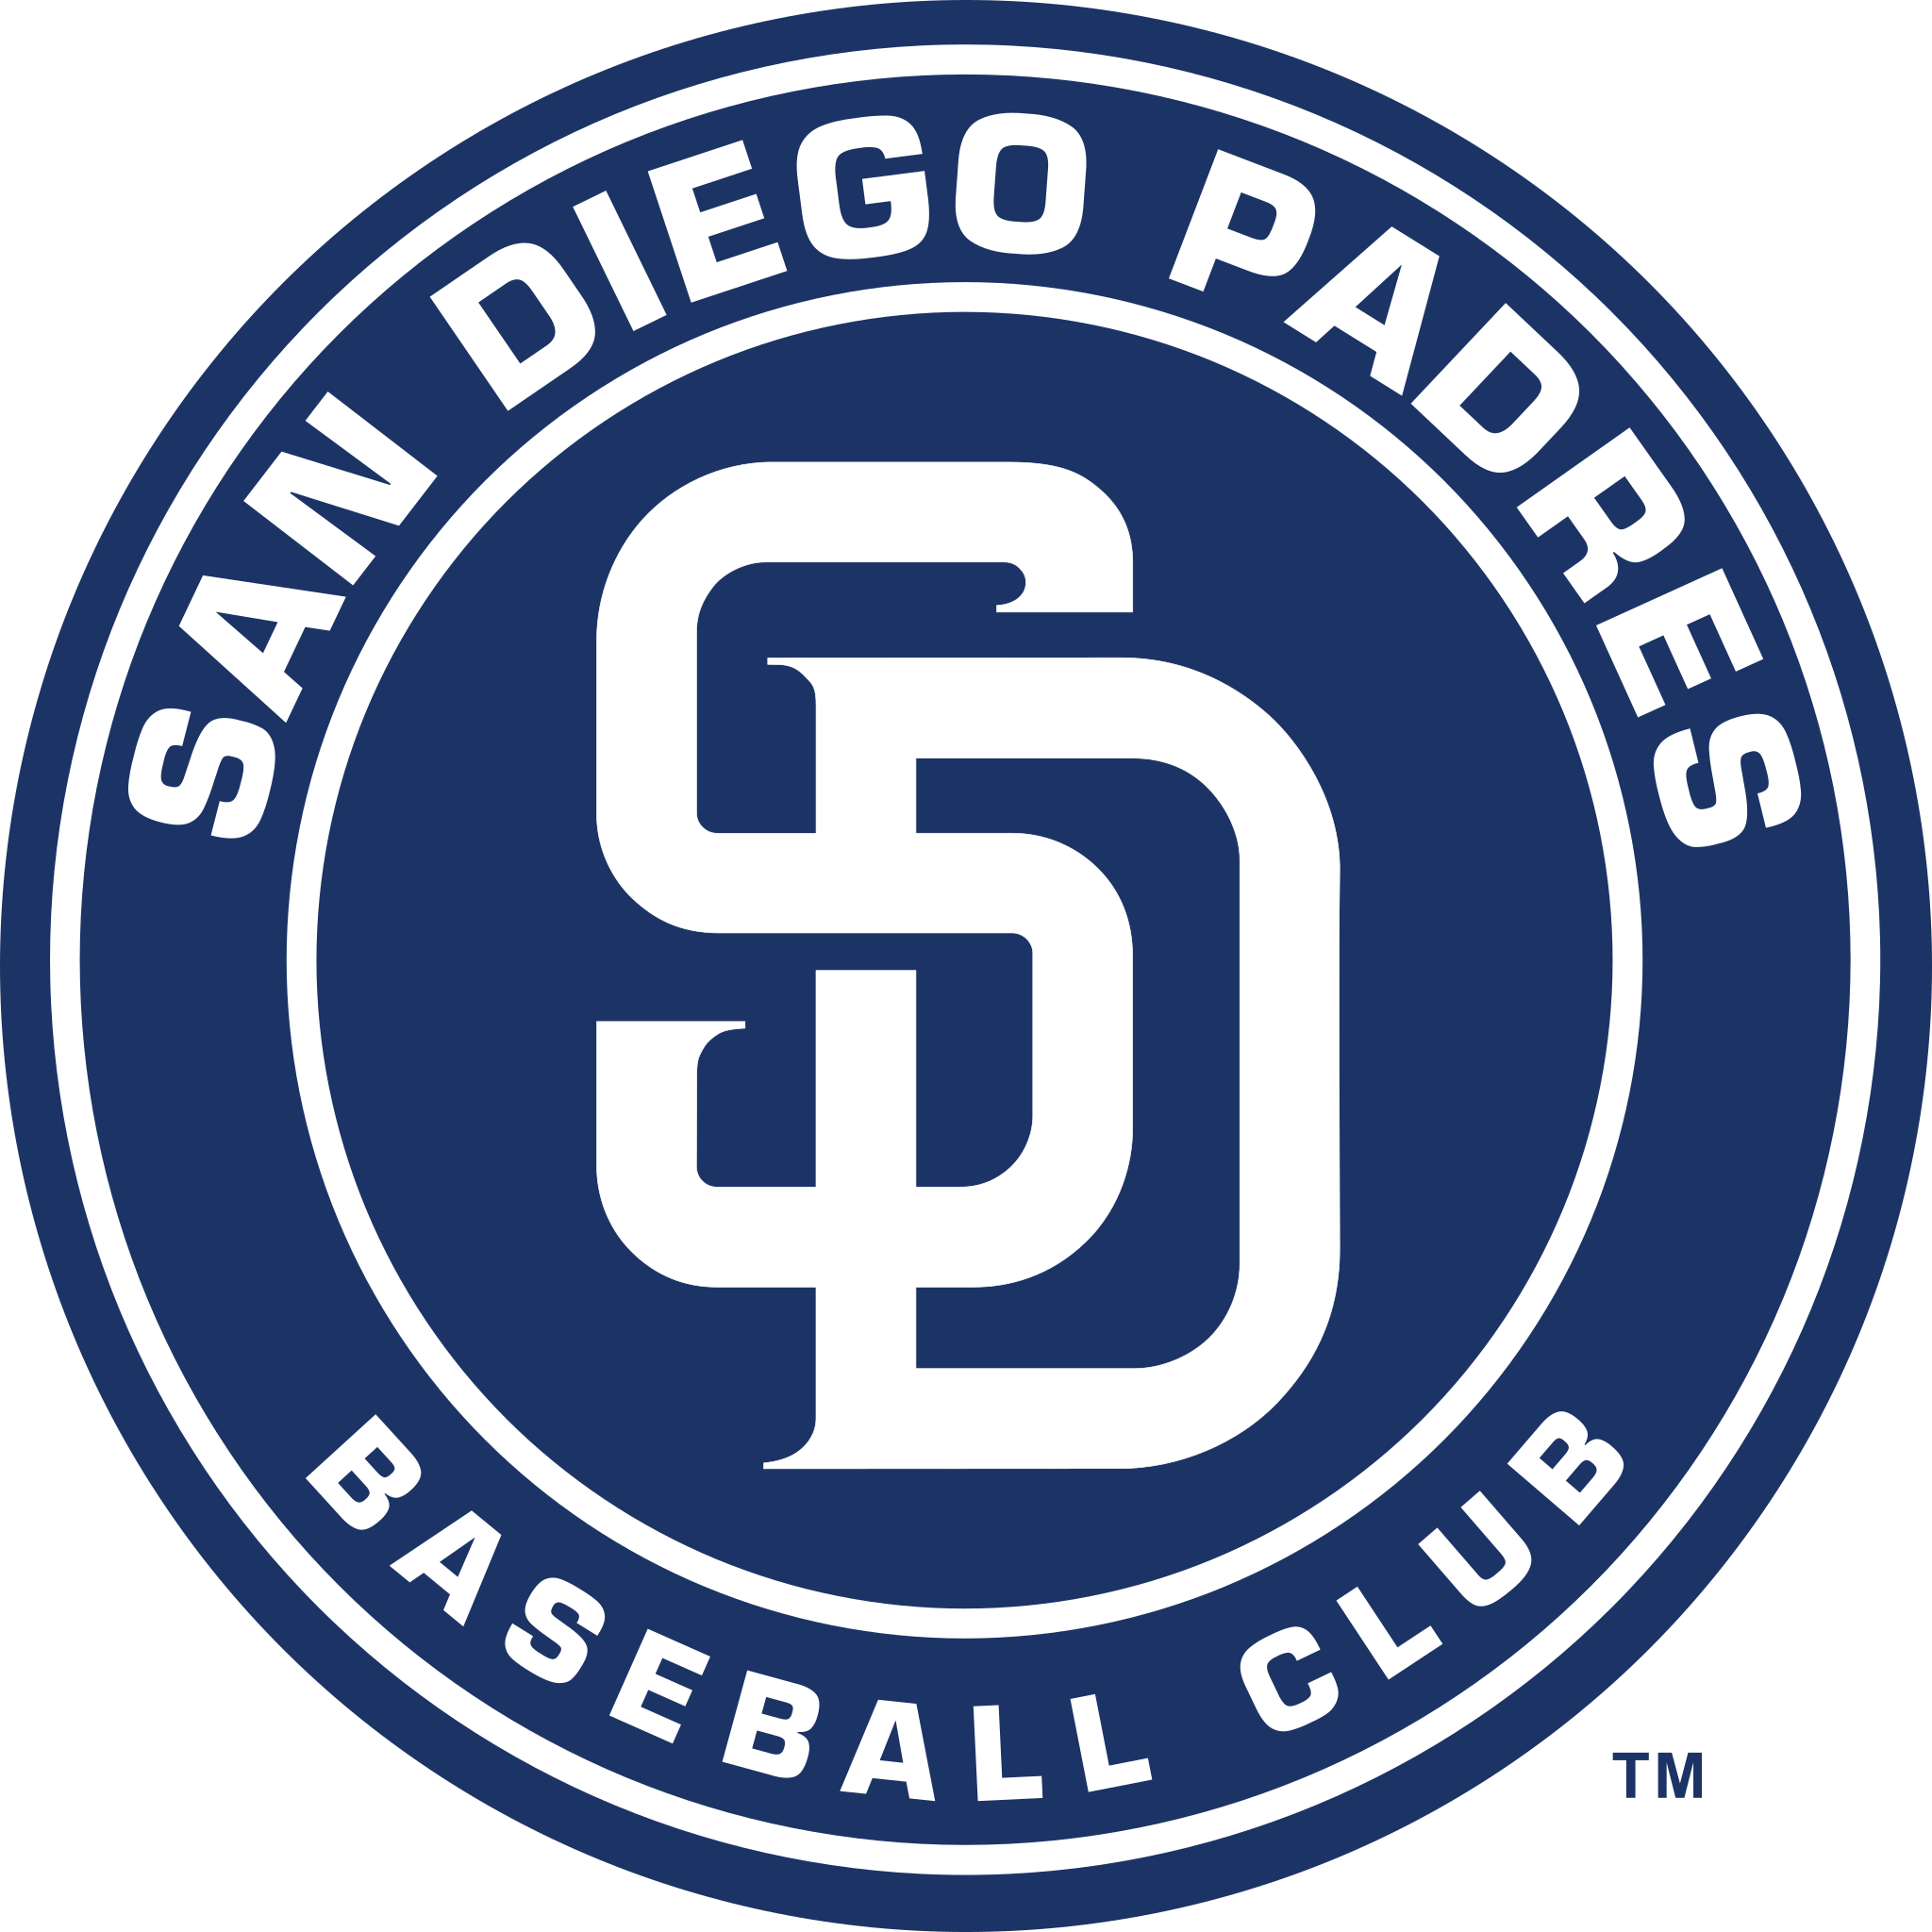 San Diego Padres - Wikipedia